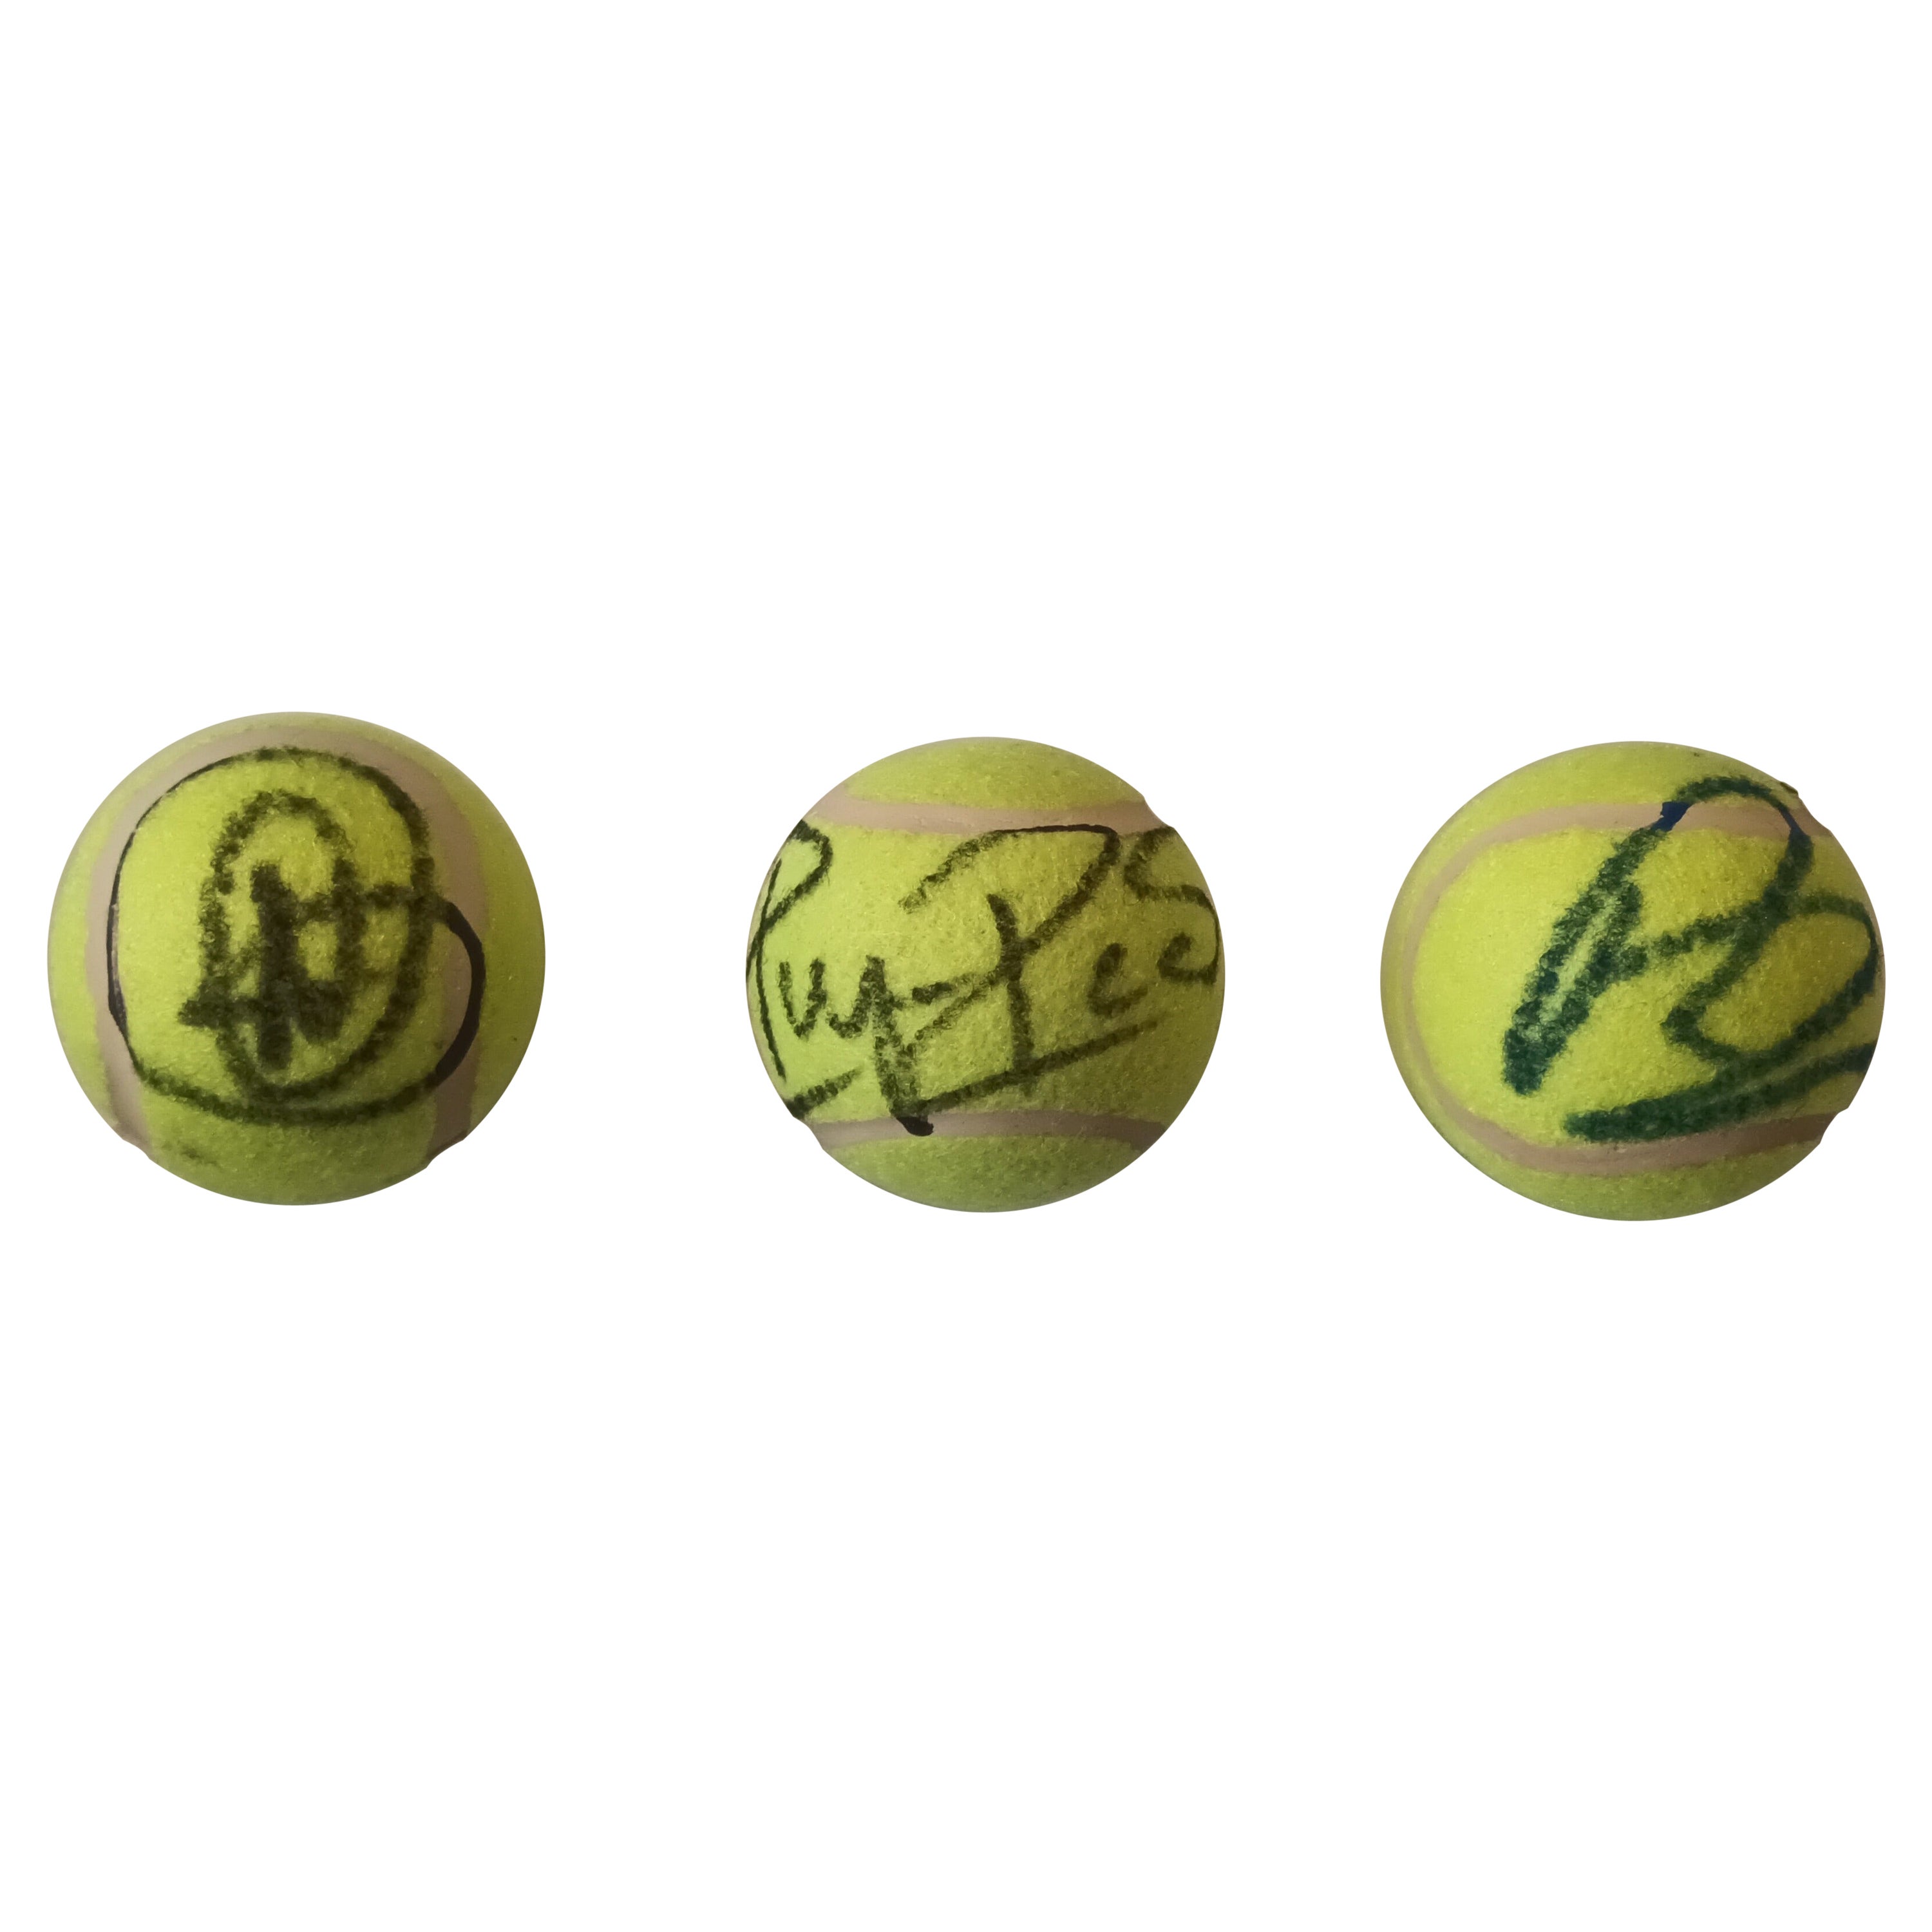 Federer, Nadal and Djokovic Autographed Tennis Balls